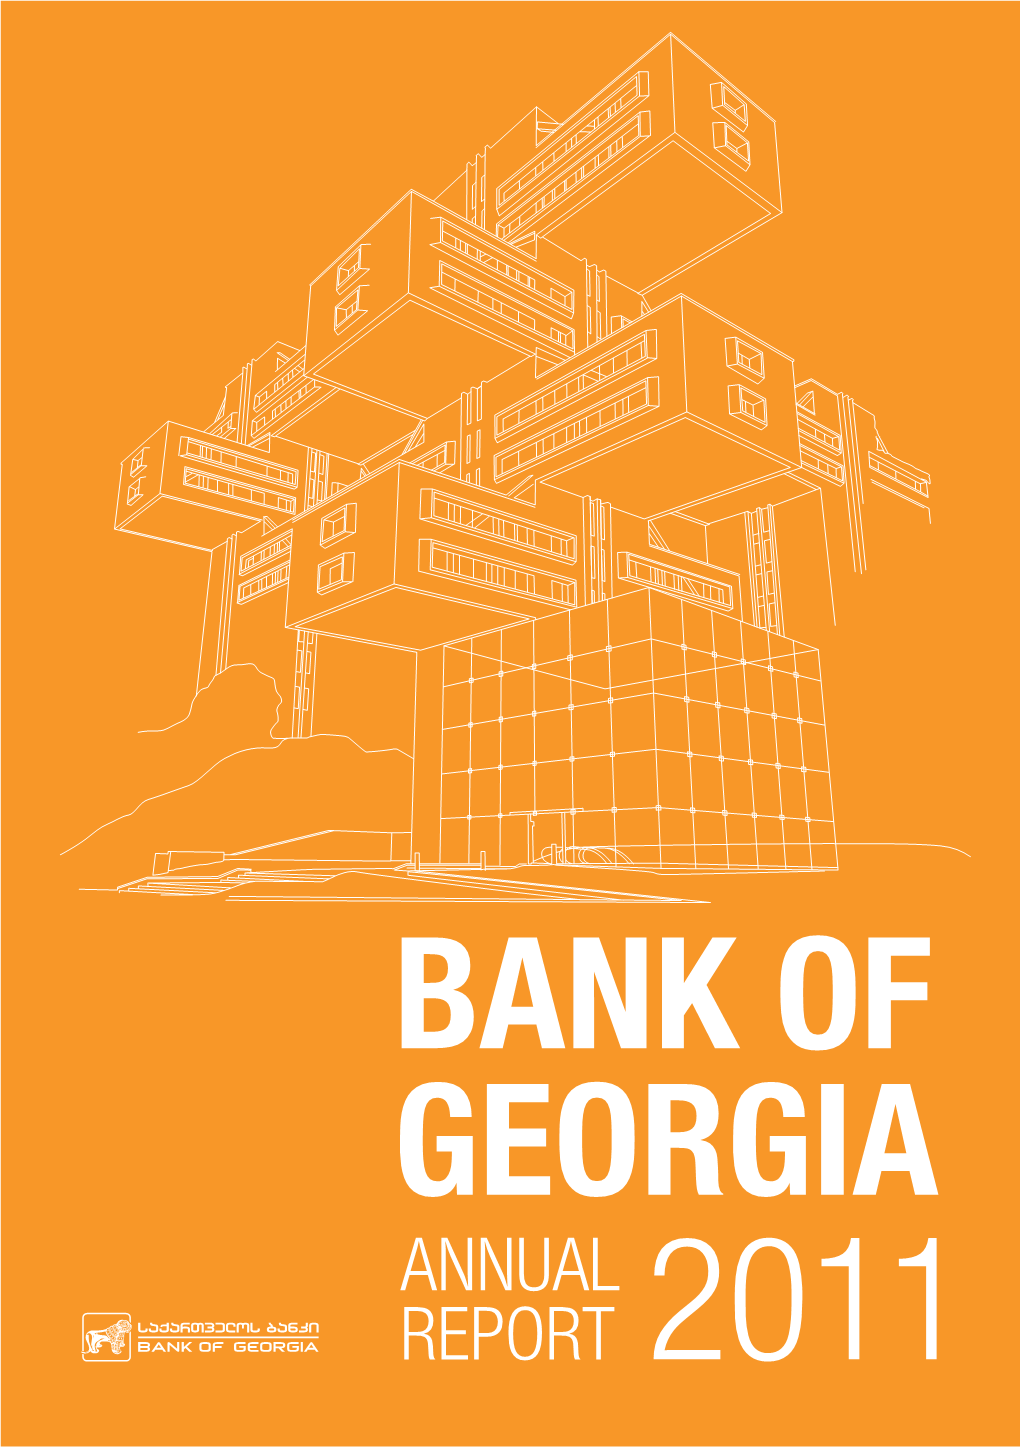 Bank of Georgia Annual Report 2011